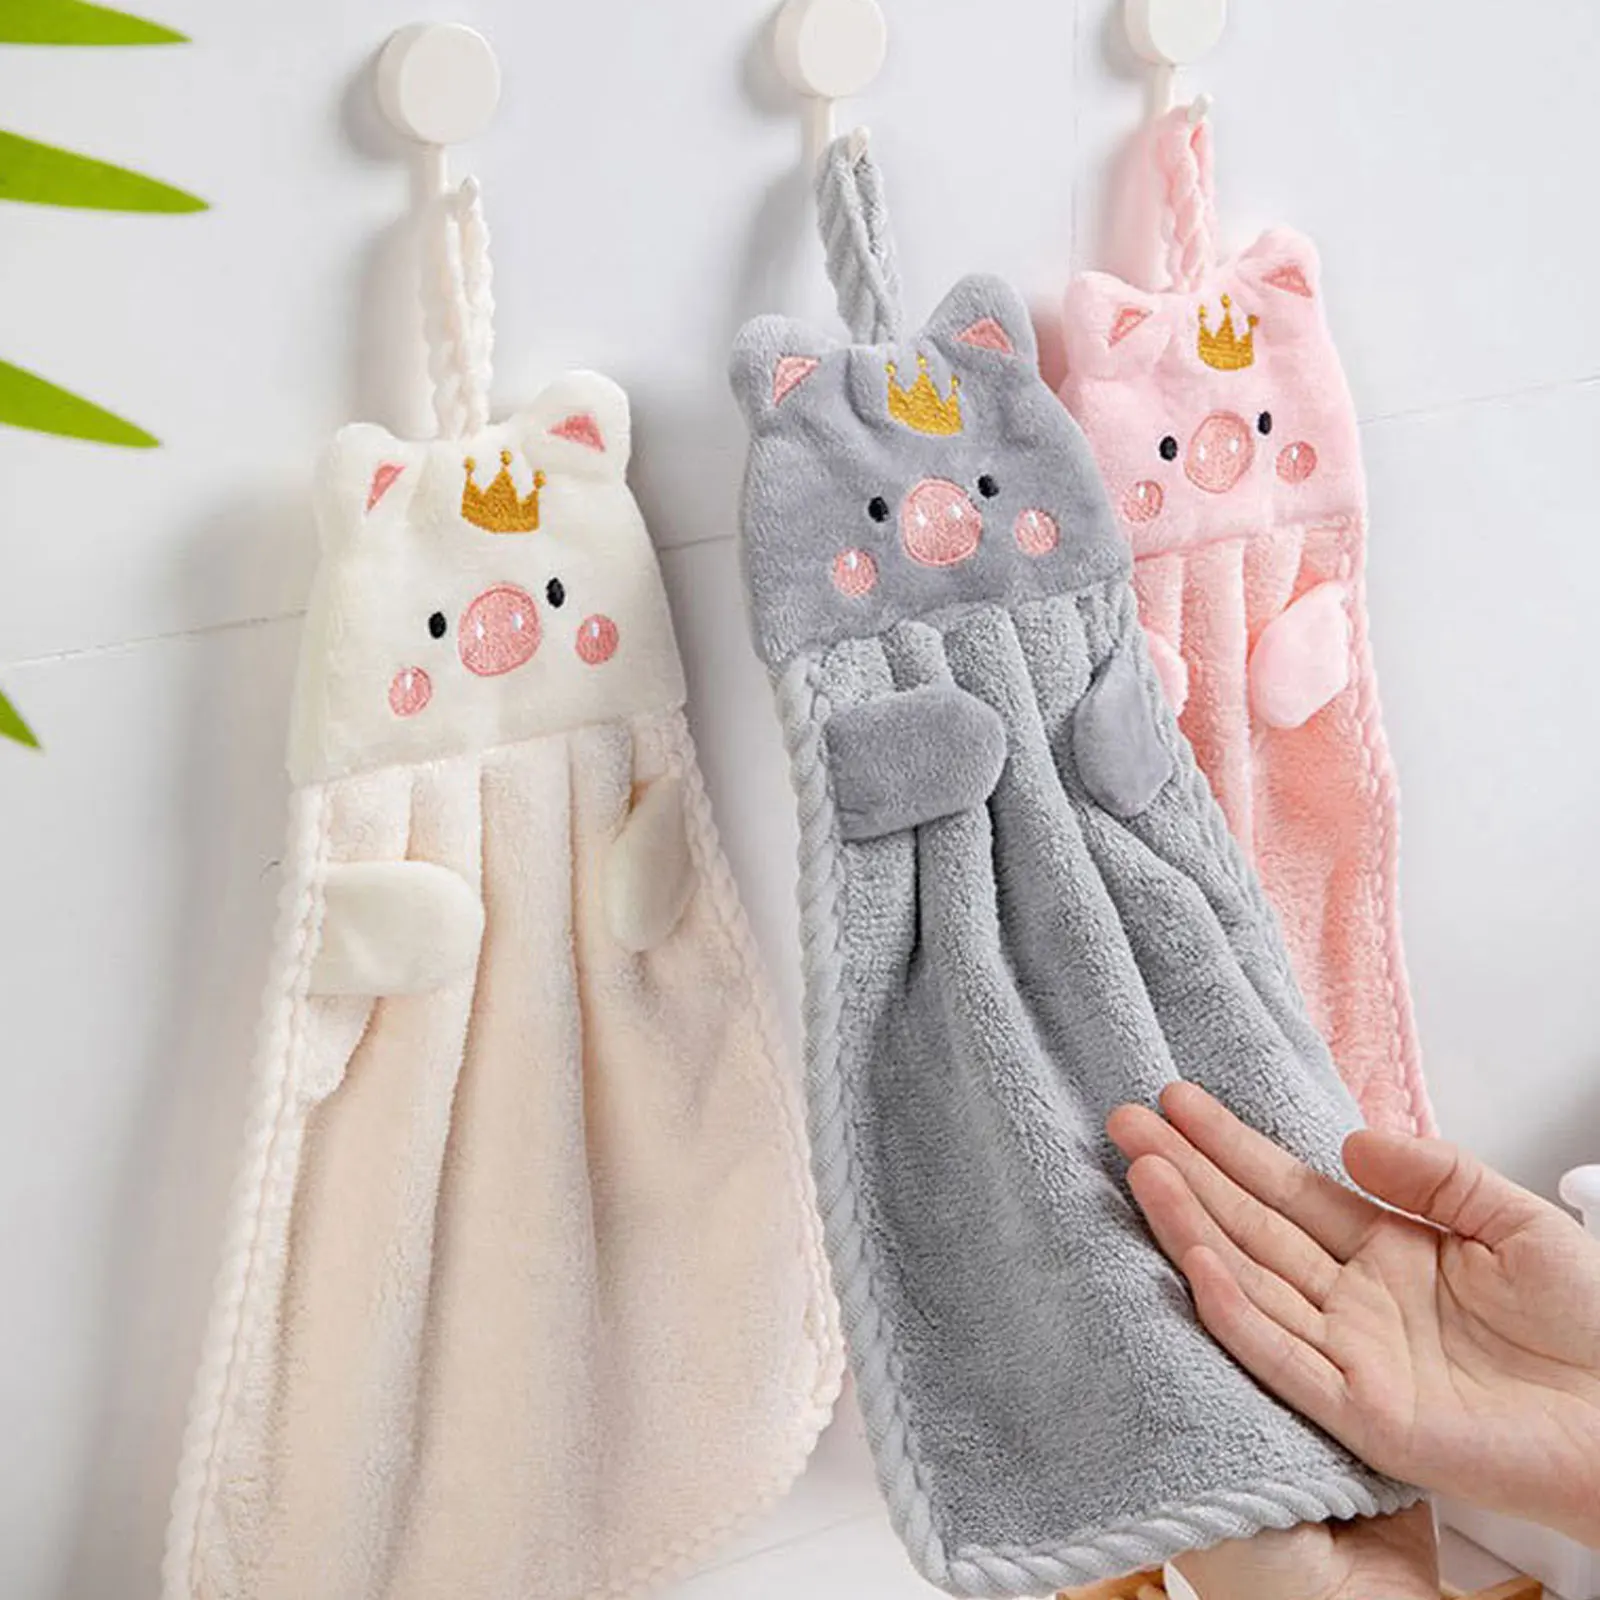 SUGN Hanging Kitchen/Bathroom/Bedroom Hand Towels,Cute Children Microfiber  Coral Fleece Hand Towel with Convenient Hanging Loop Fast Drying(Pink)